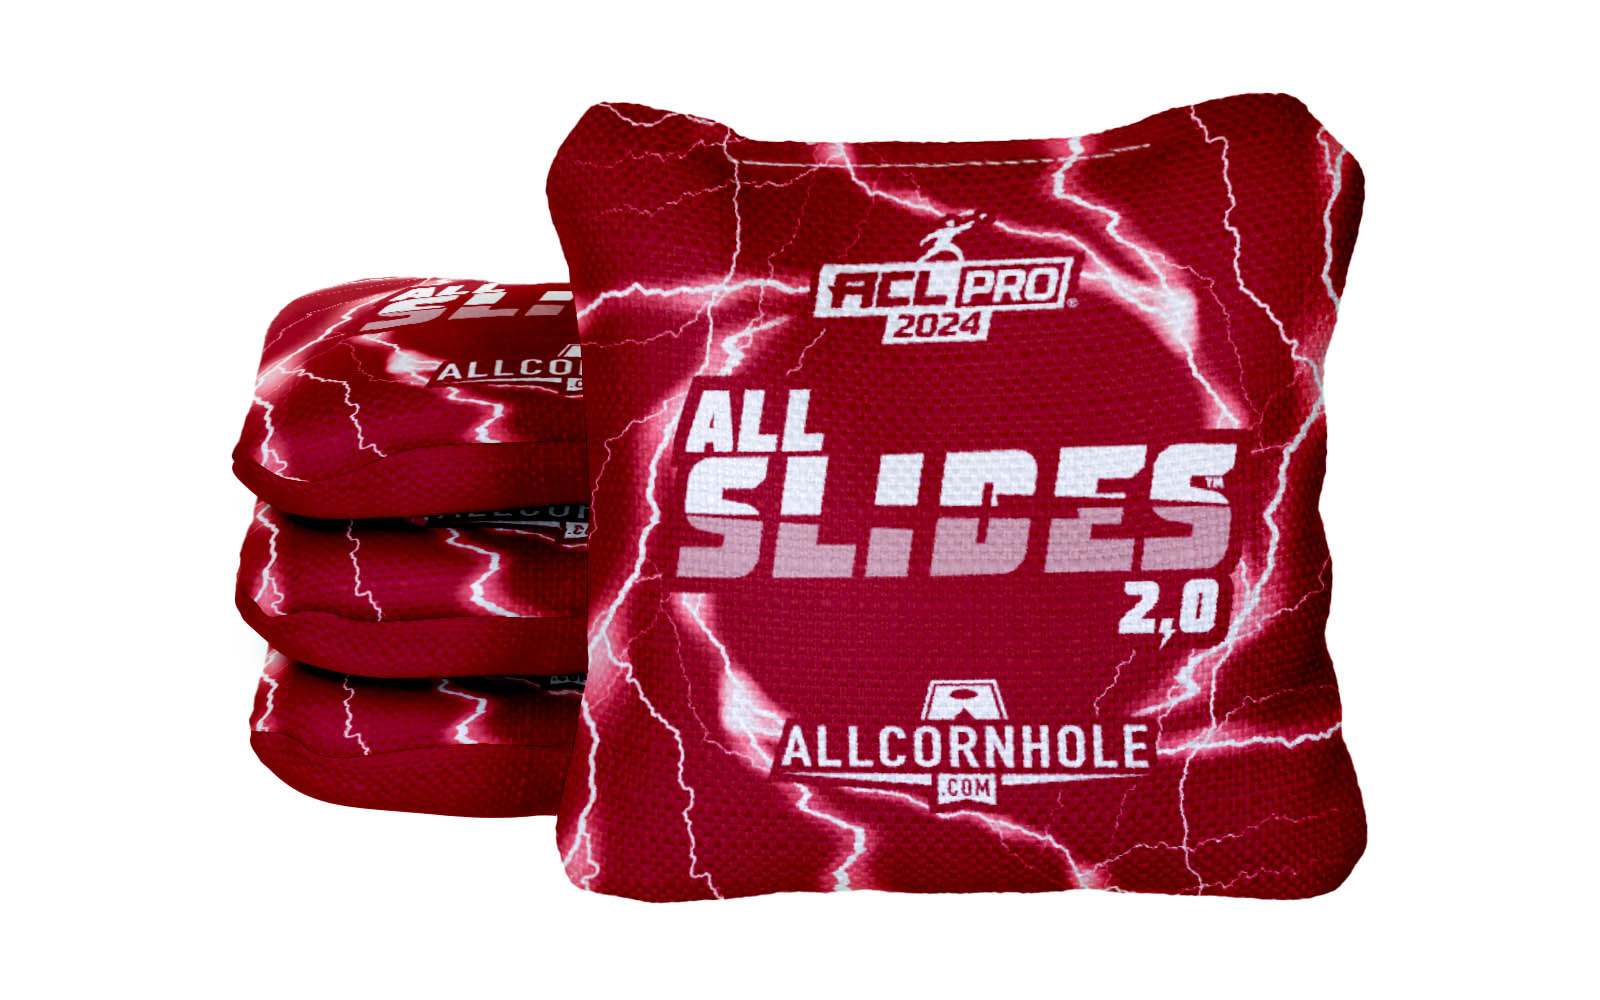 Officially Licensed Collegiate Cornhole Bags - All-Slide 2.0 - Set of 4 - University of Arizona